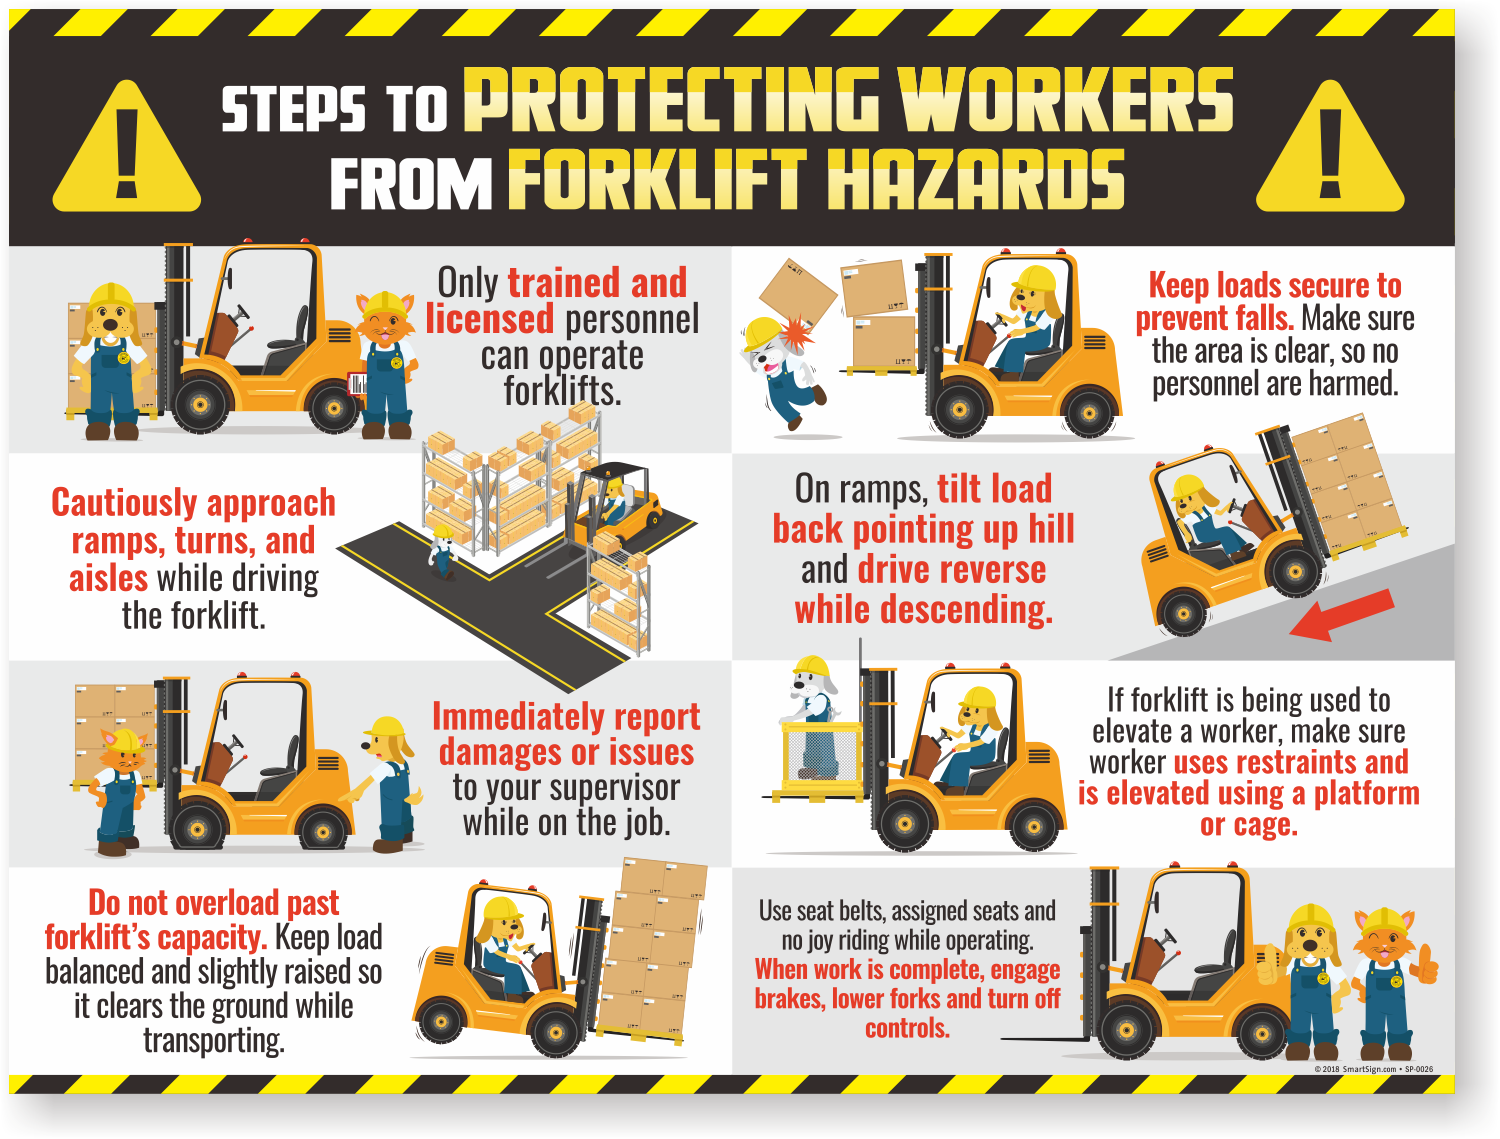 Safety poster - Forlift-2